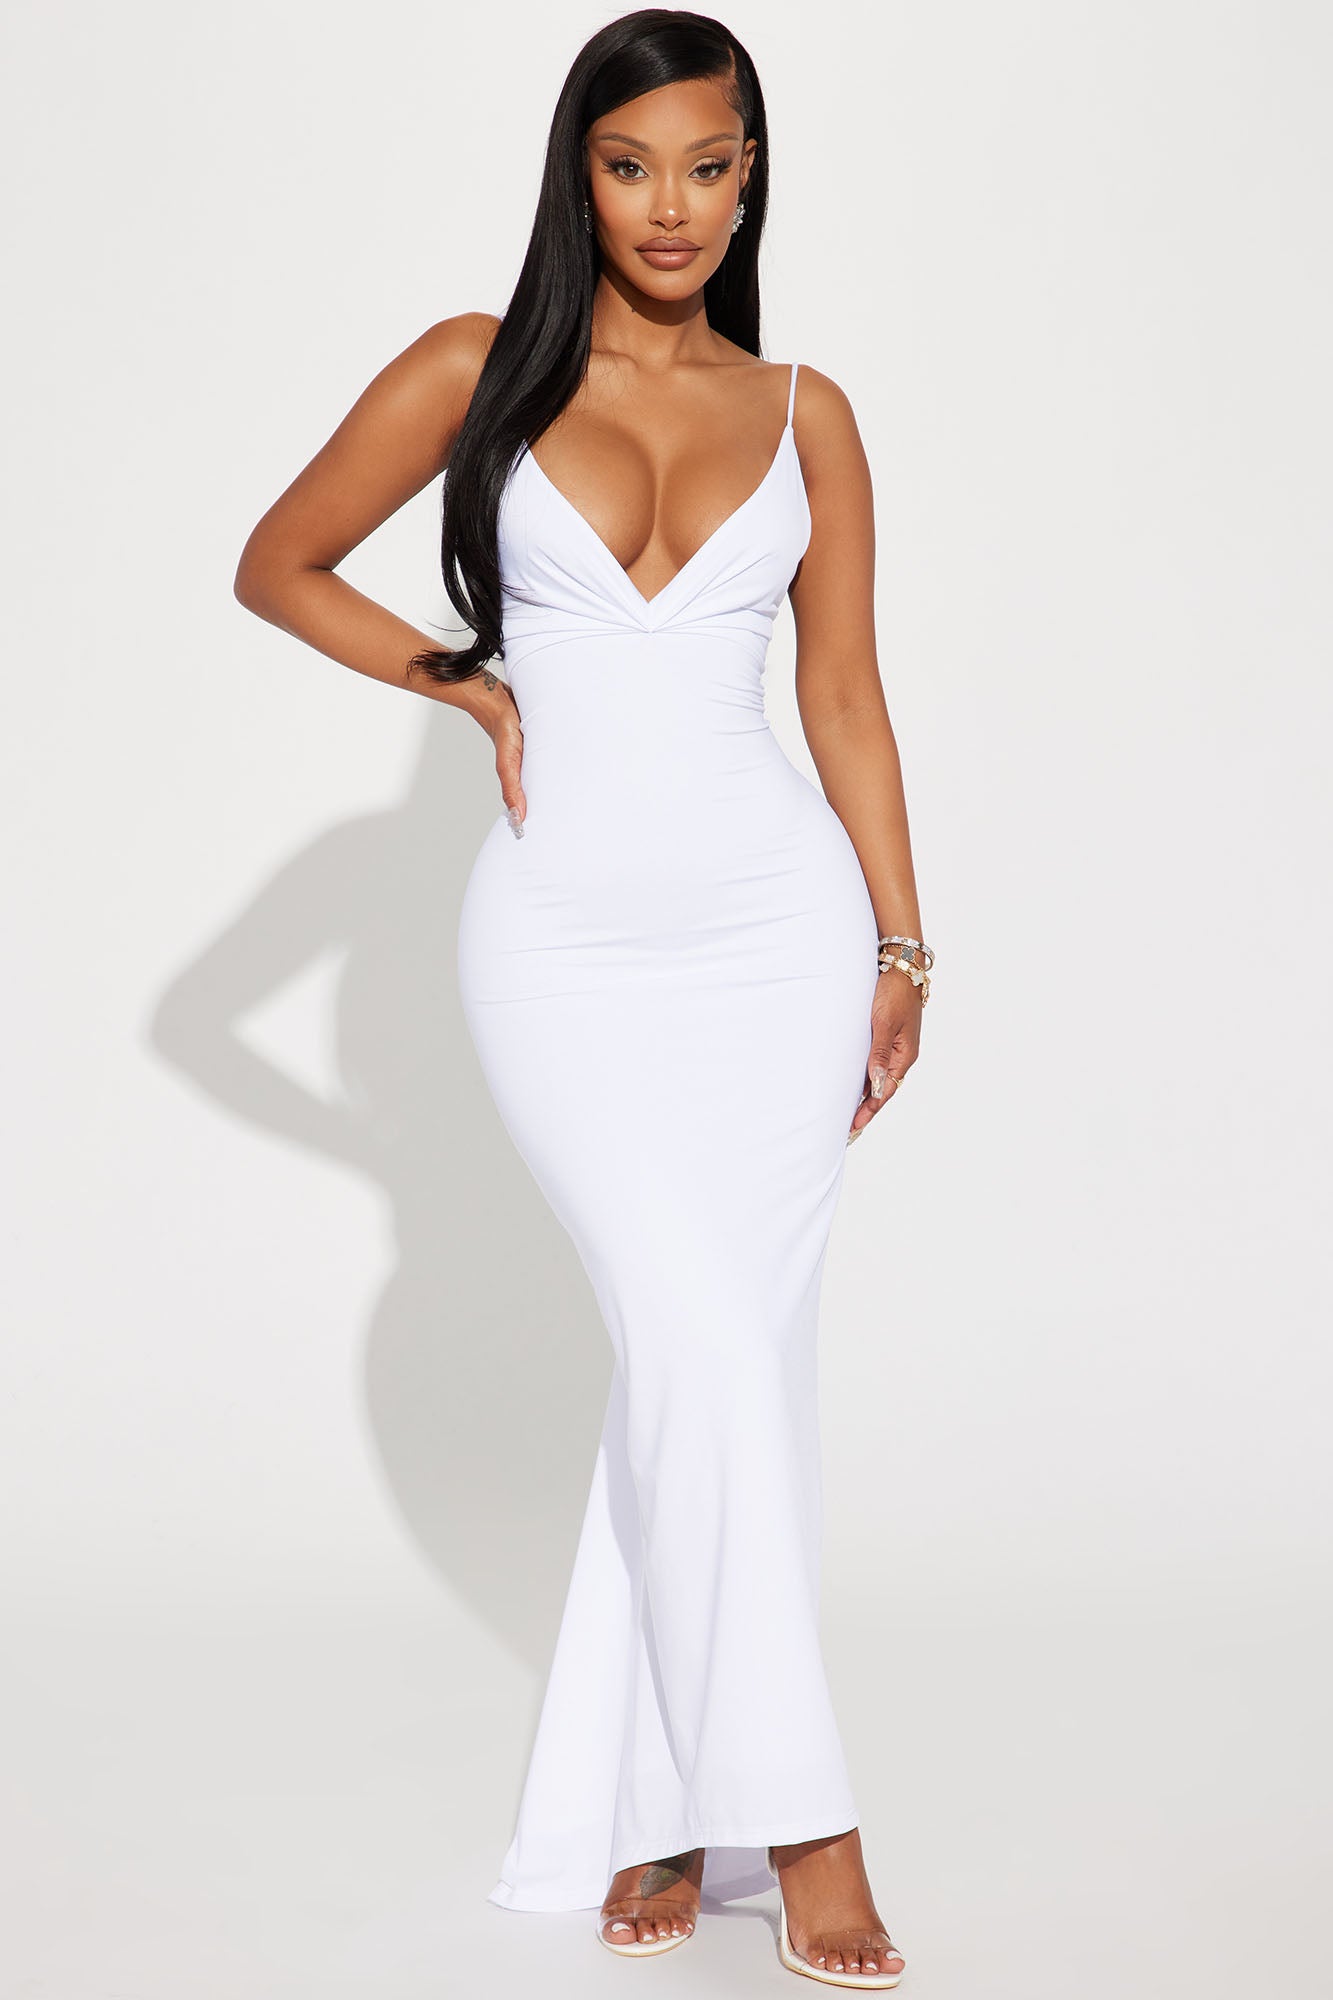 White Sleeveless Maxi Dress - Mermaid Maxi Dress - Backless Dress - Lulus